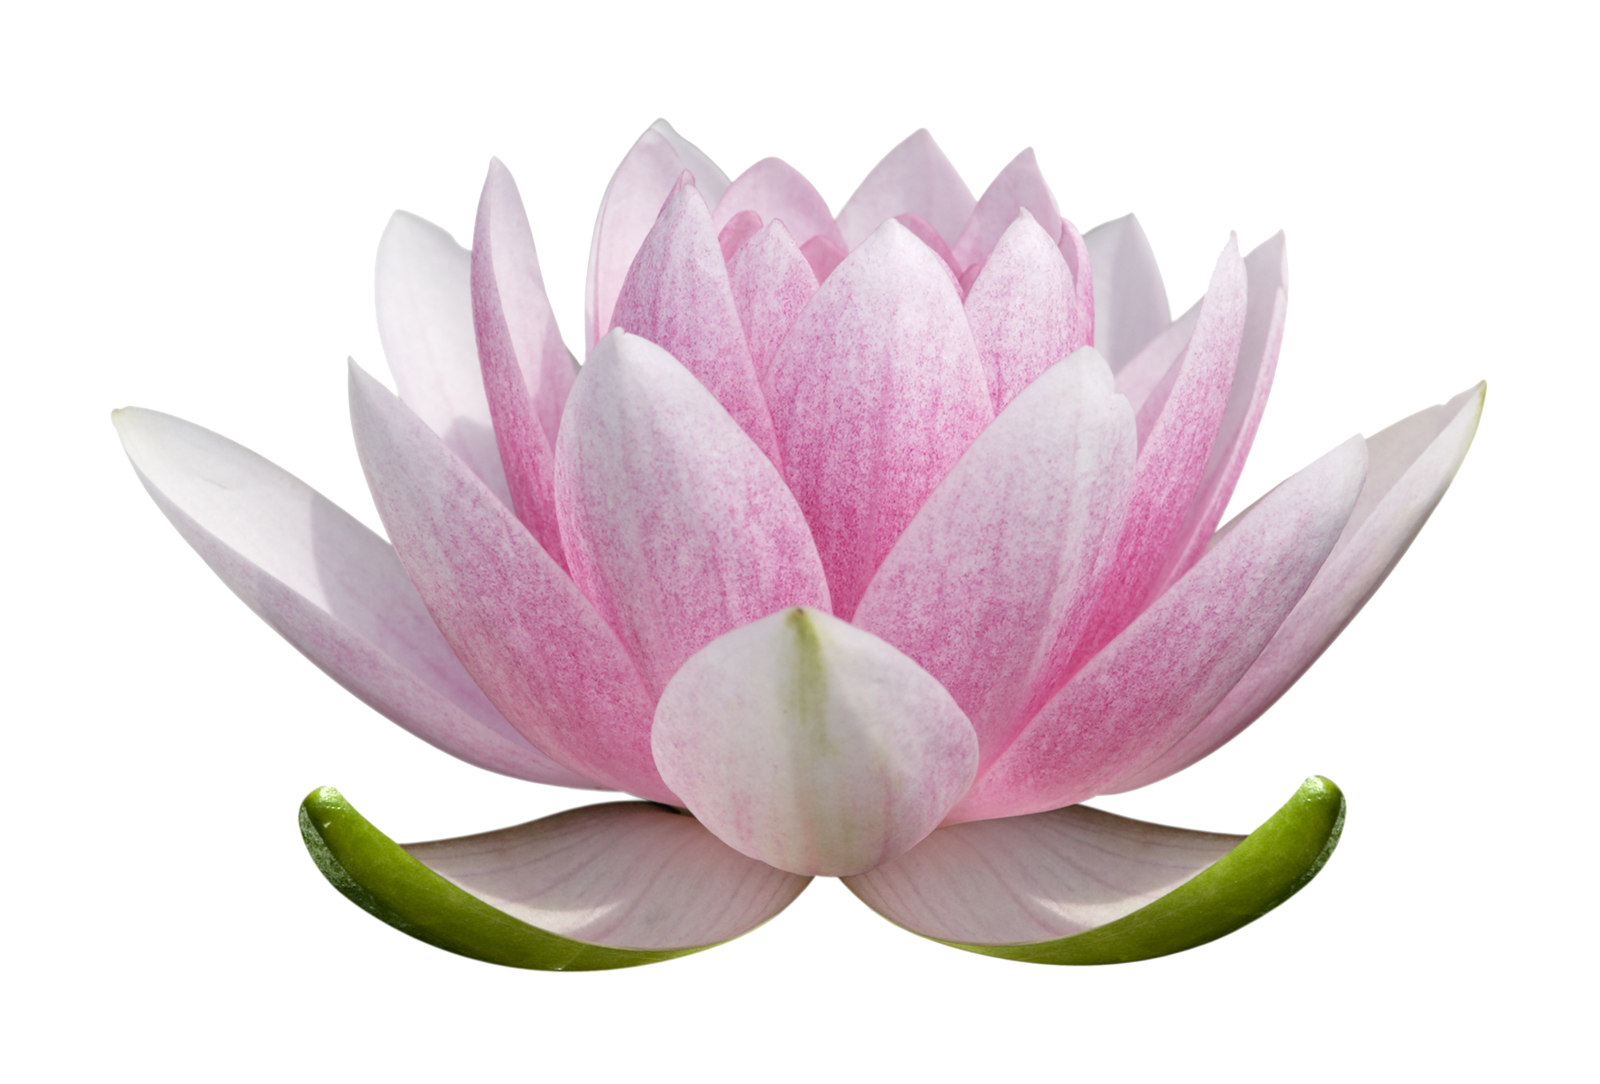 Lotus, hibiscus d'eau